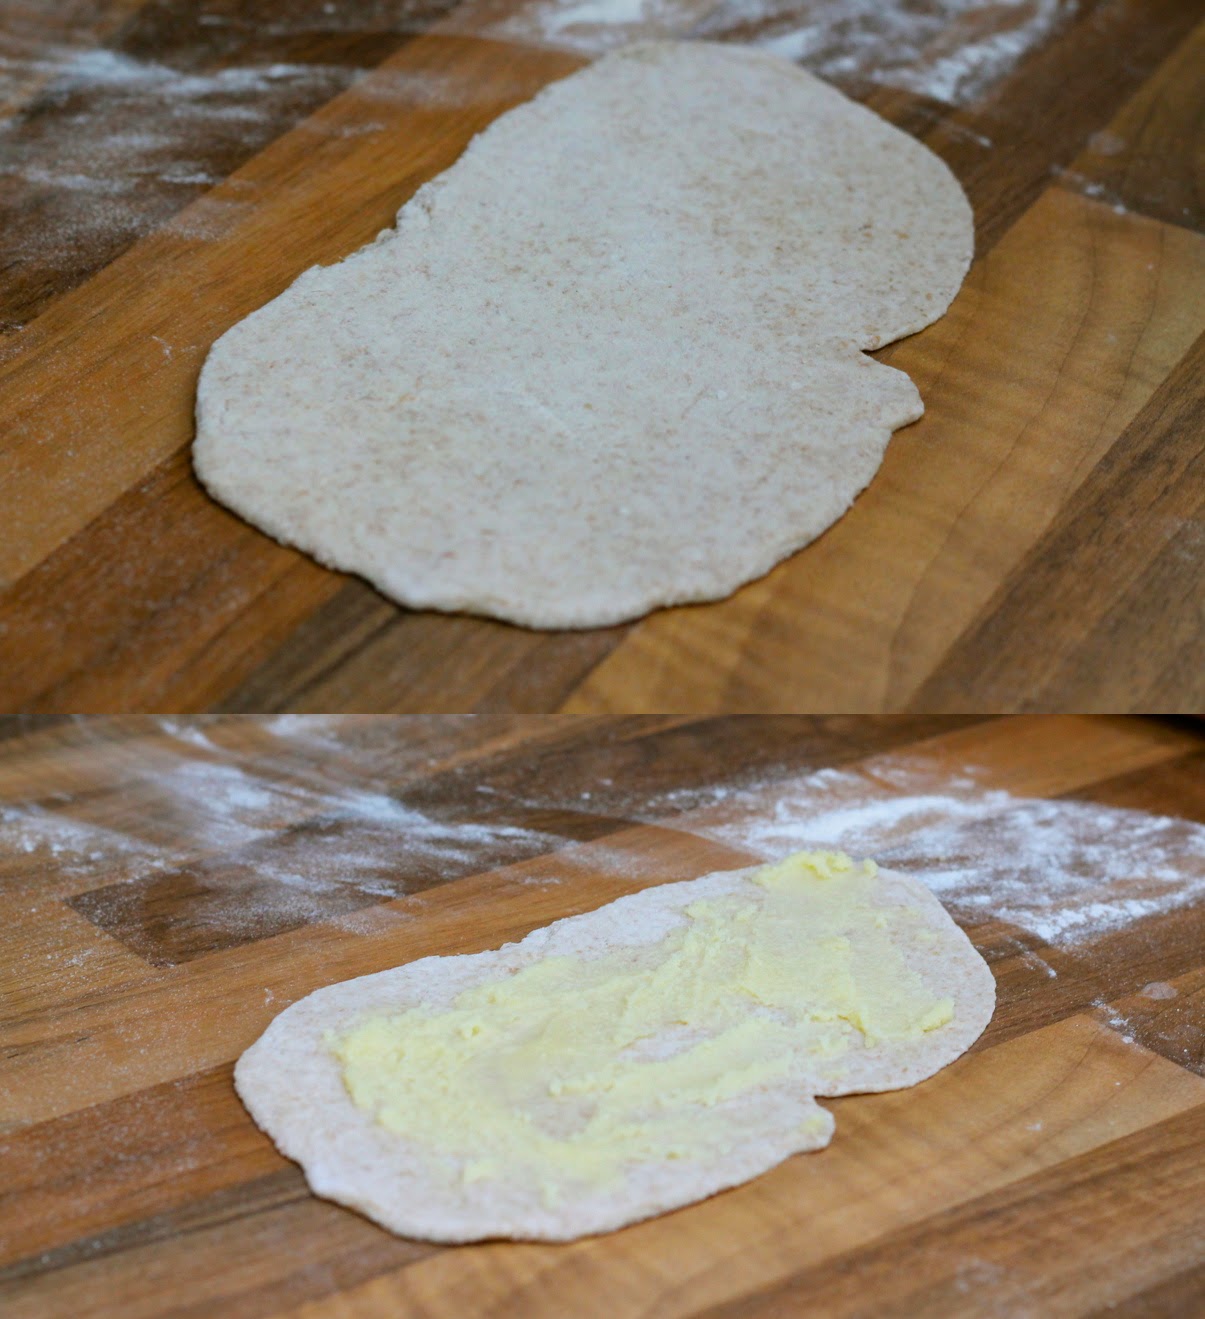 Paratha dough spread with ghee